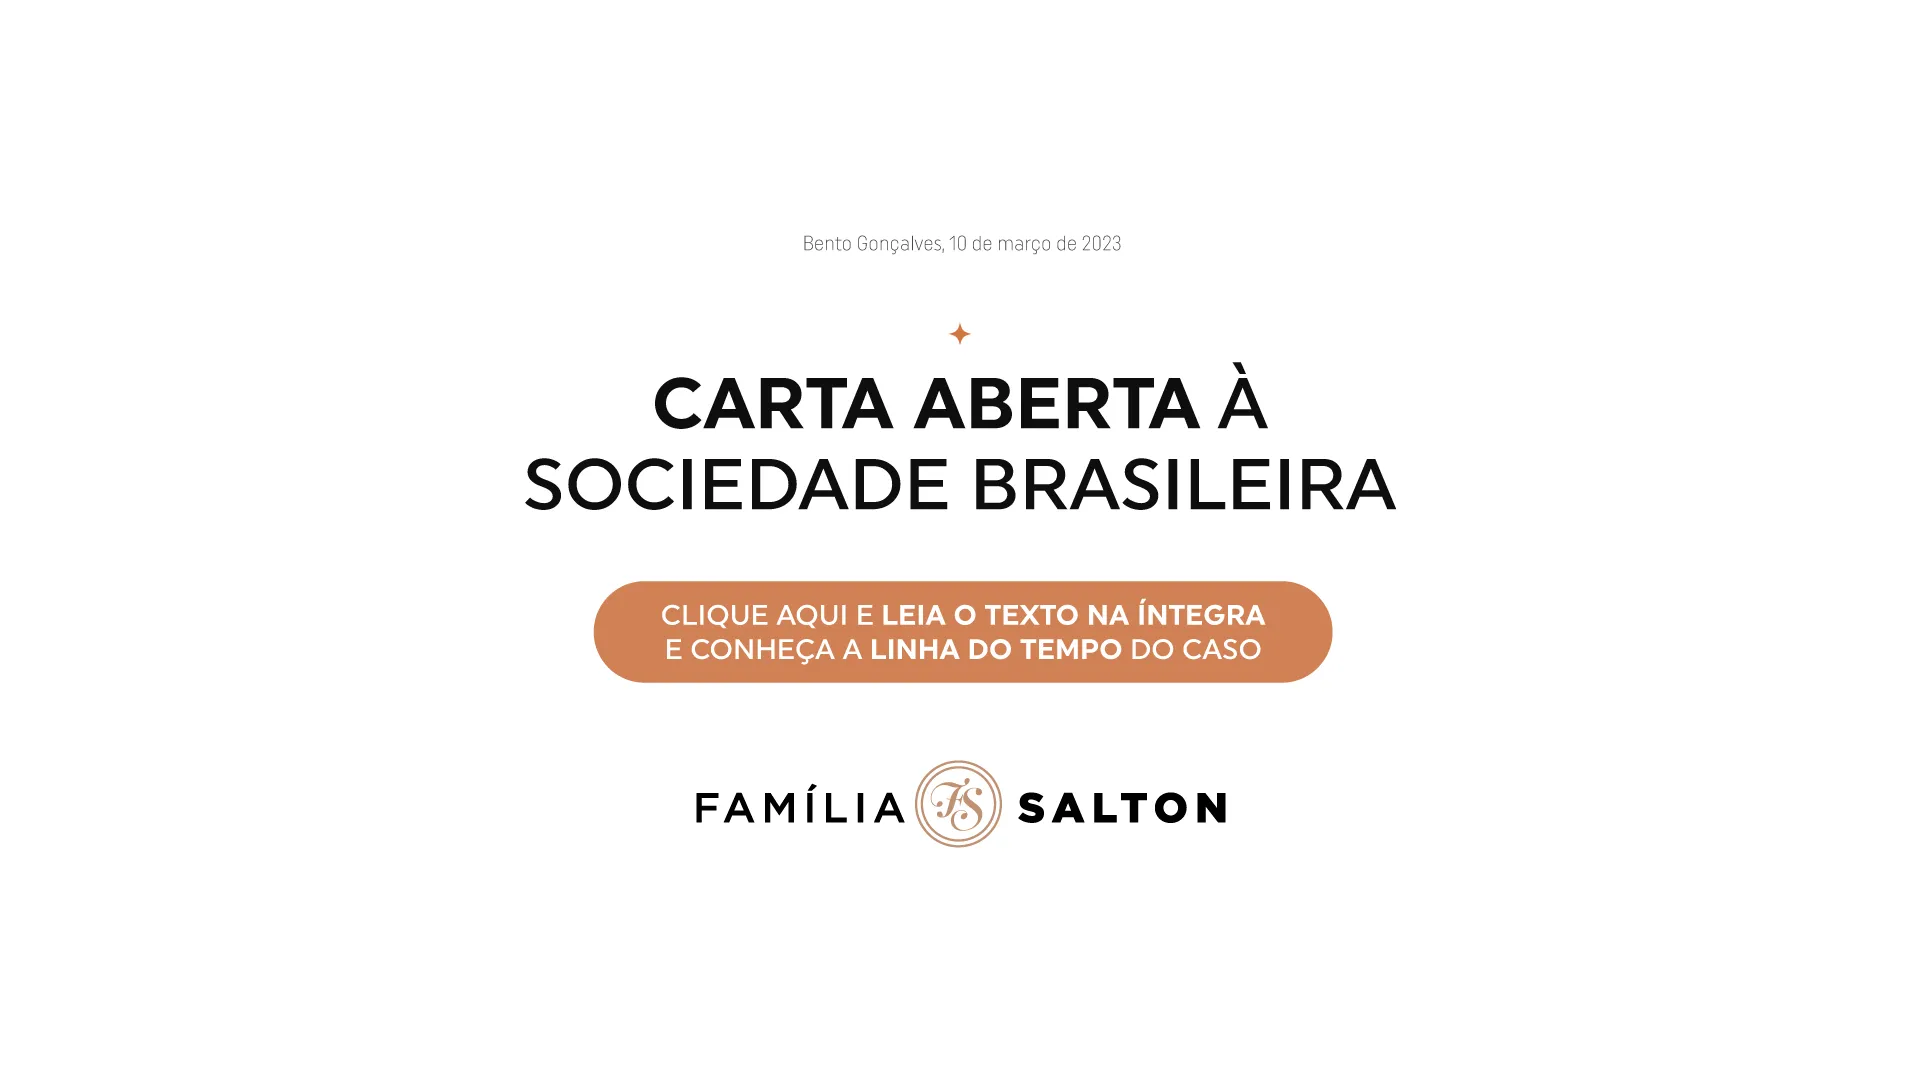 Carta aberta à sociedade brasileira